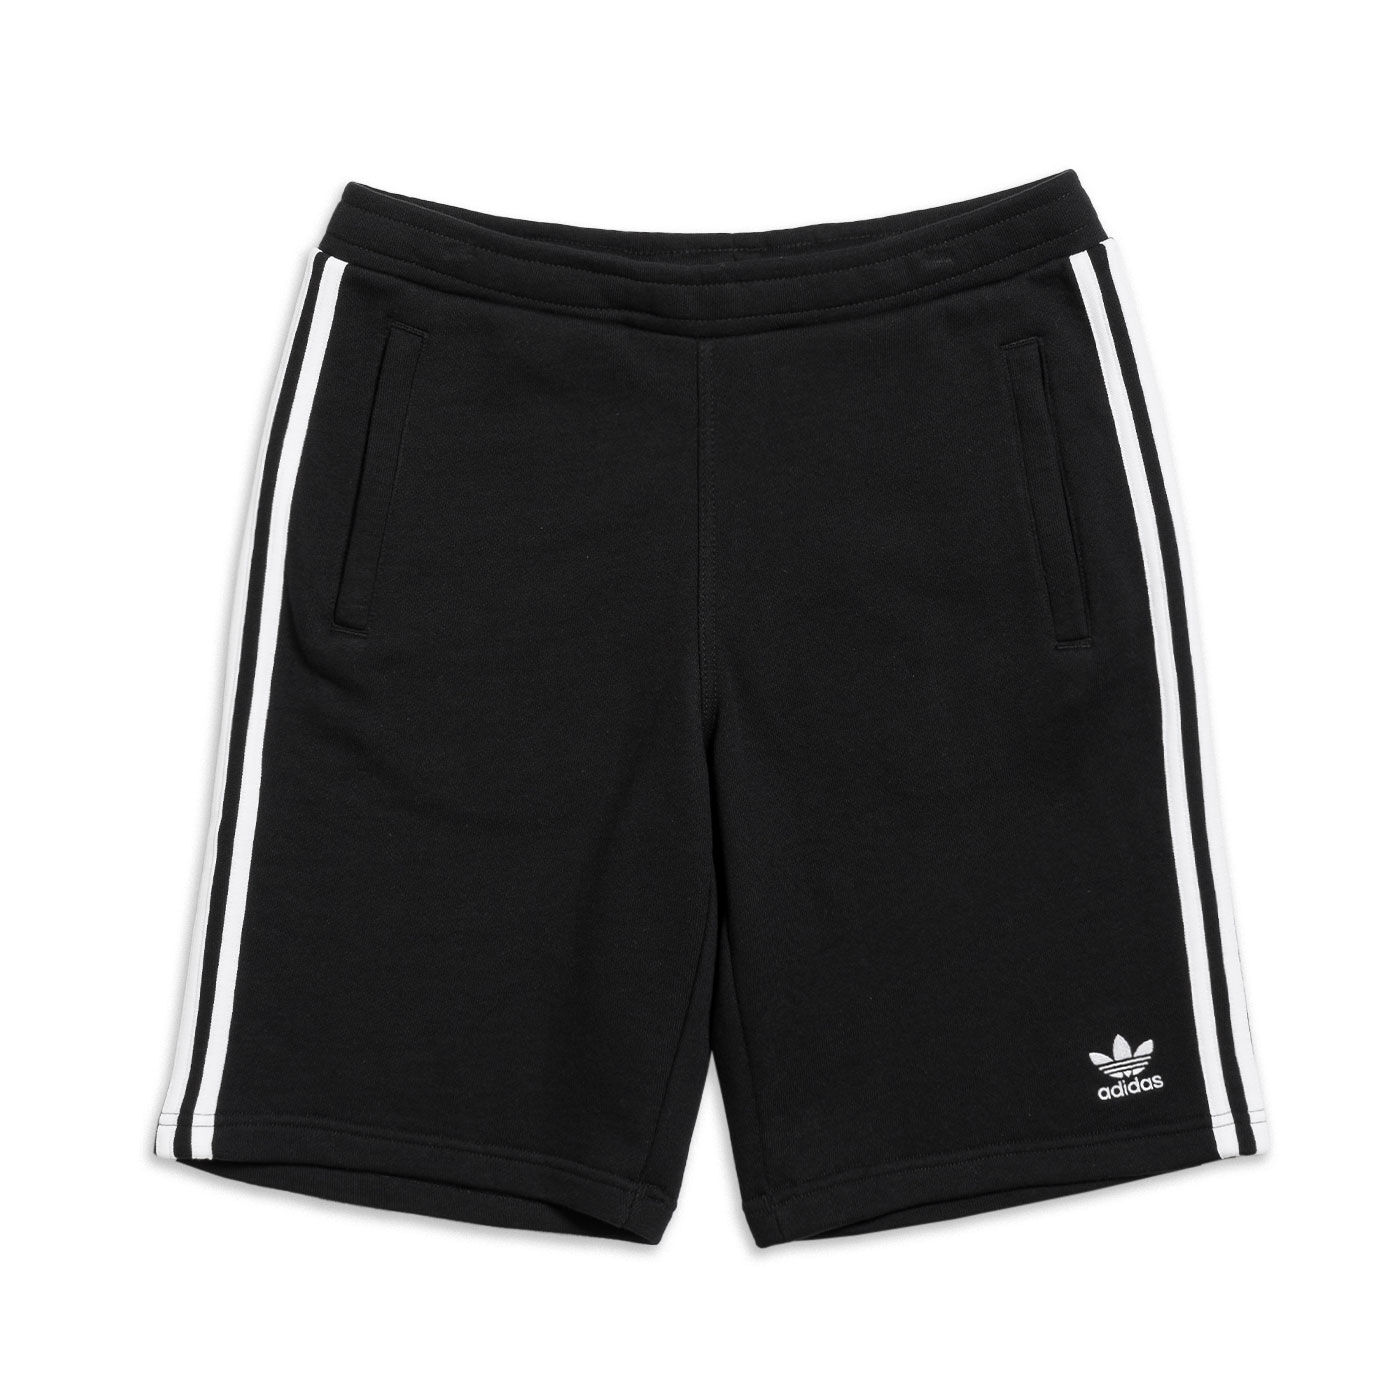 Adidas 3-stripe Short